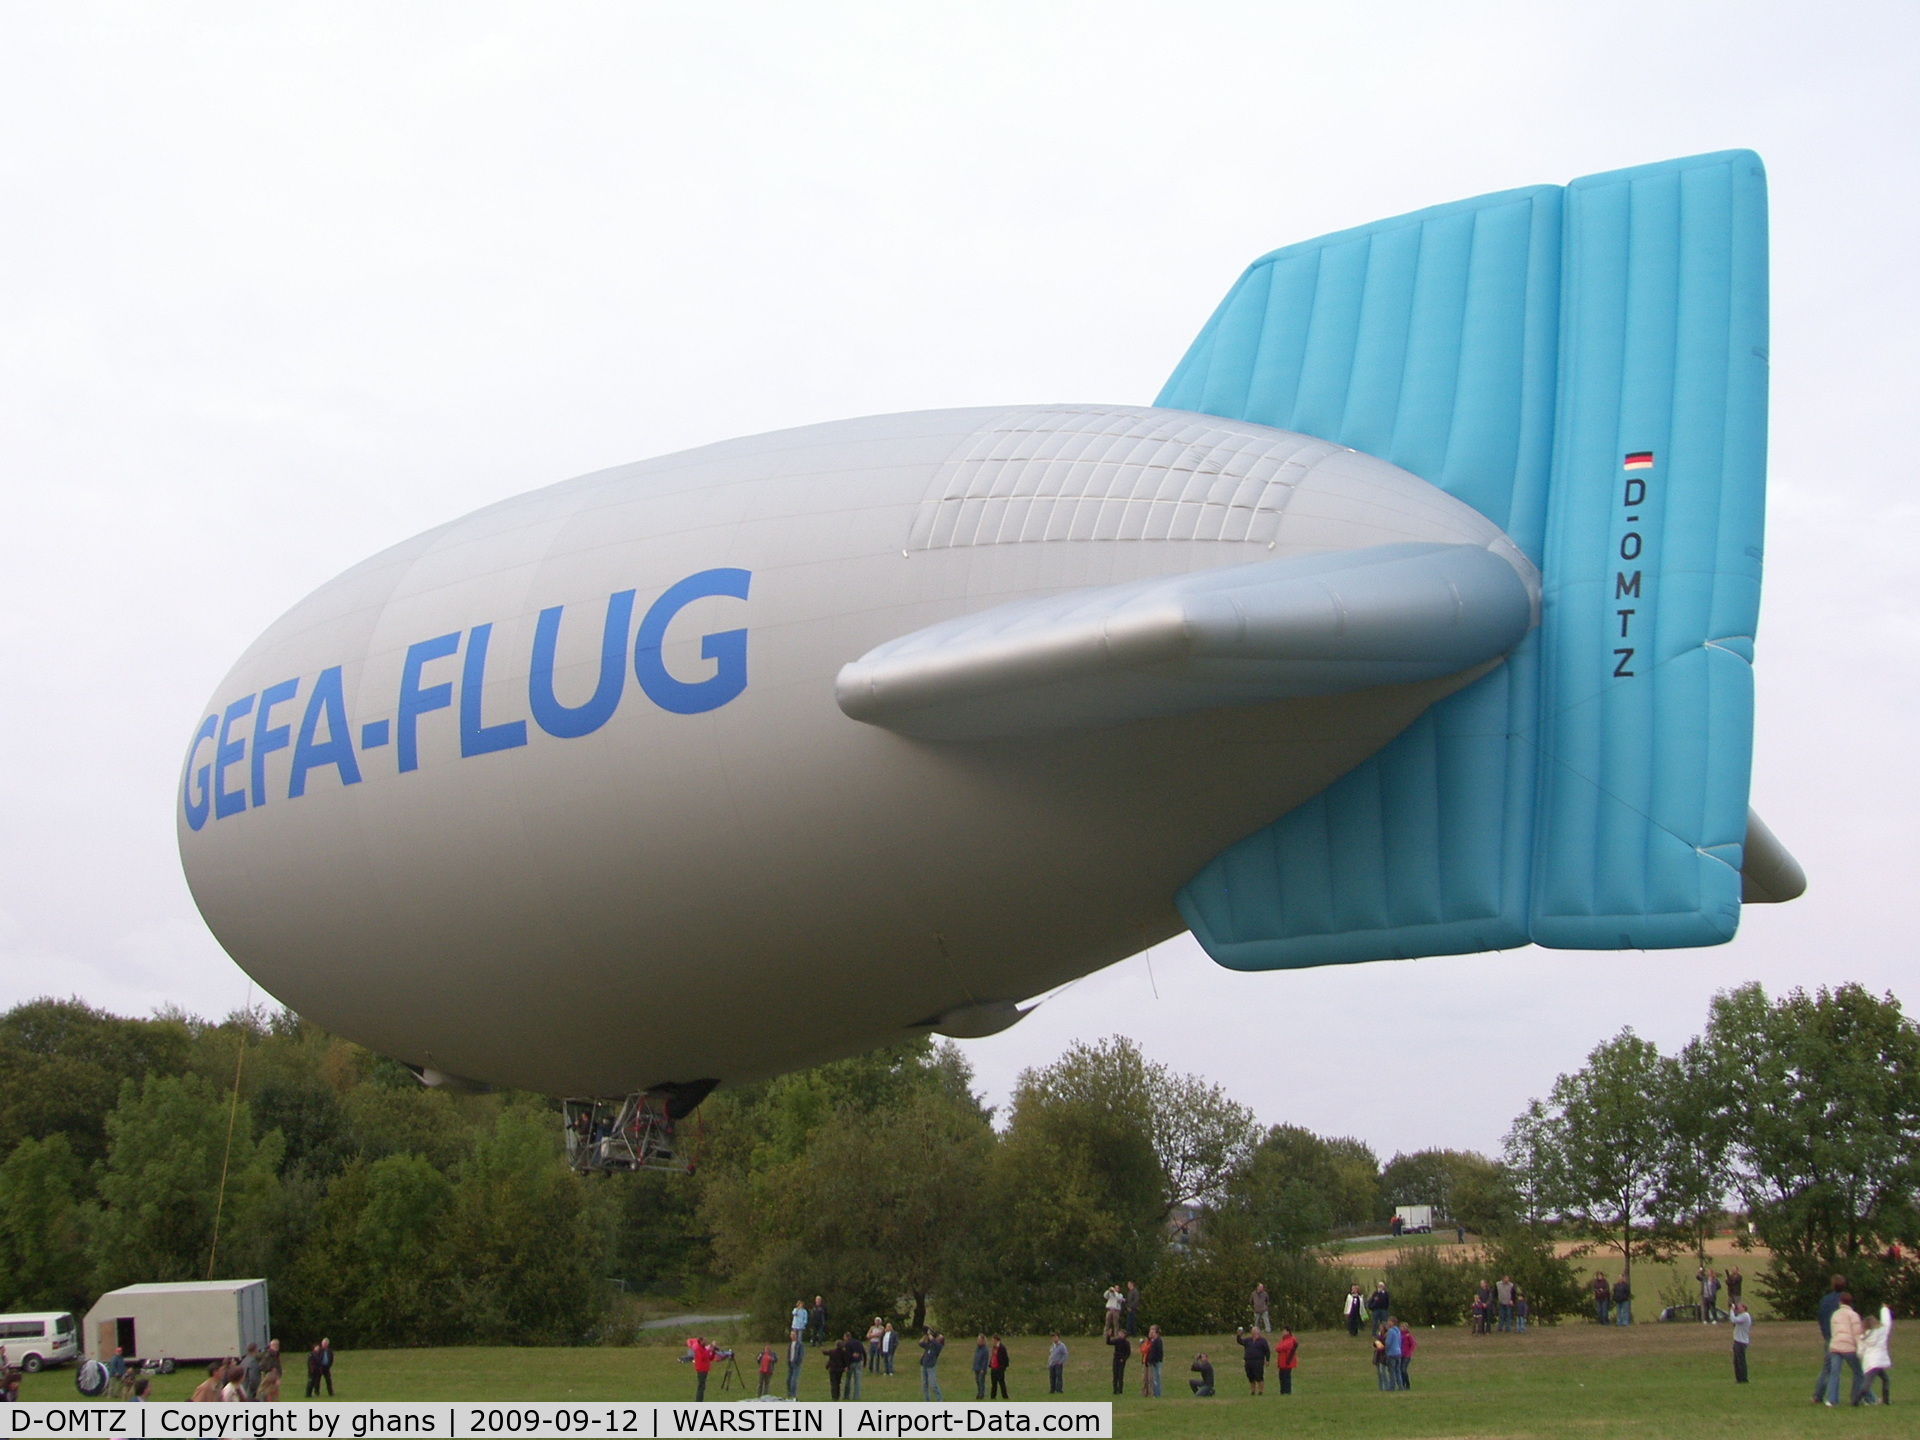 D-OMTZ, Gefa-Flug AS.105 C/N 50, Gefa-Flug airship